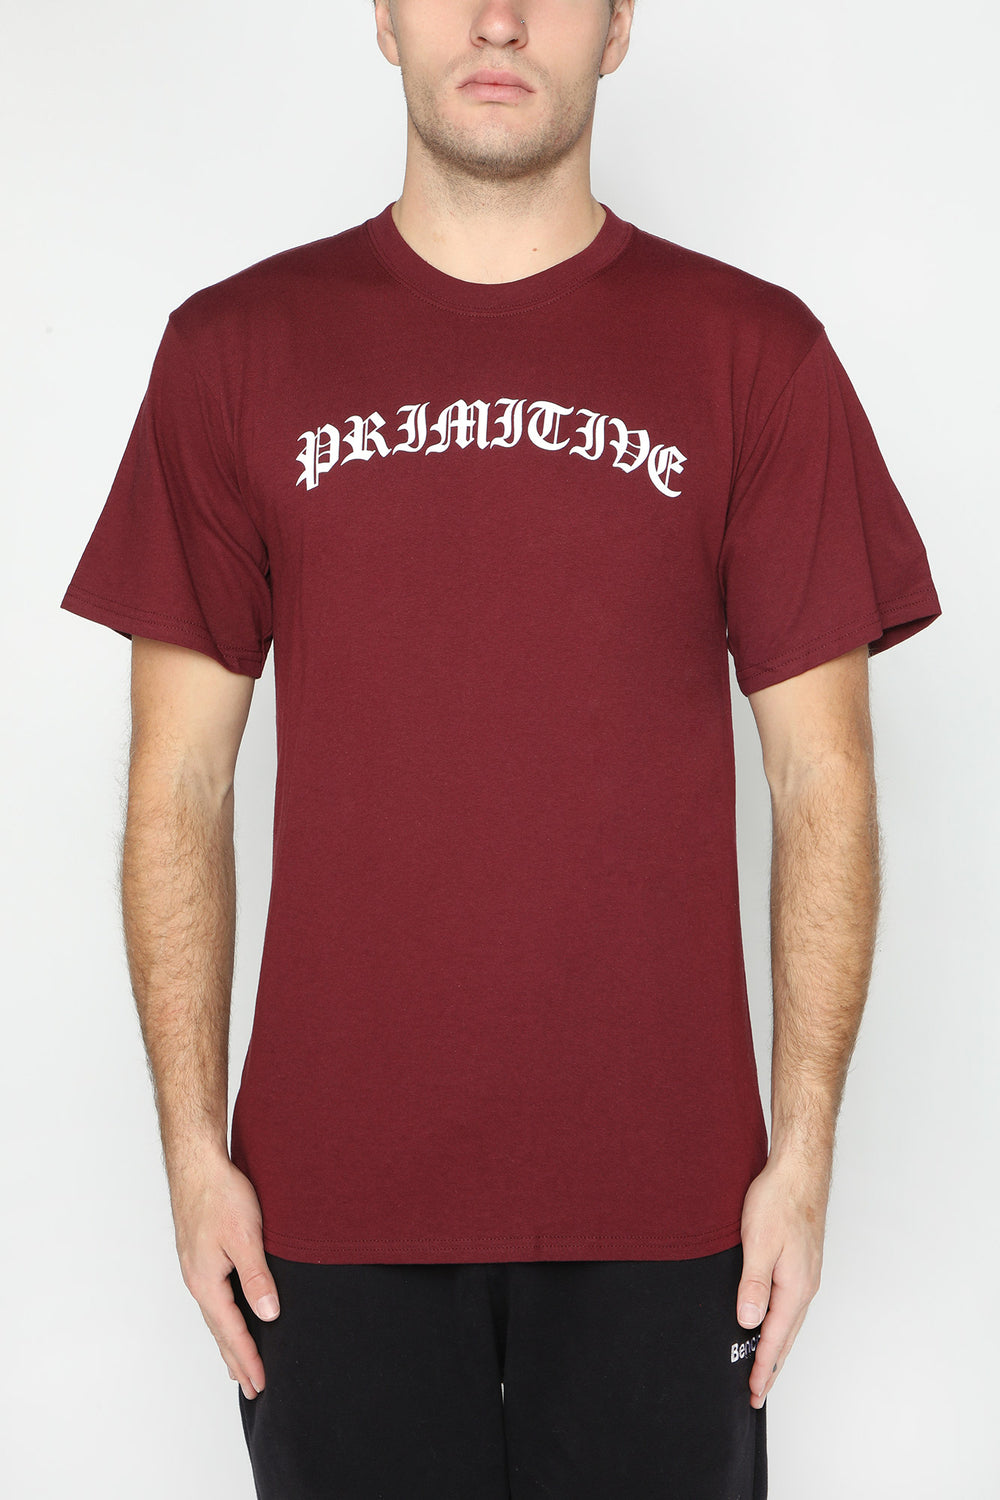 Primitive Exchange T-Shirt Burgundy